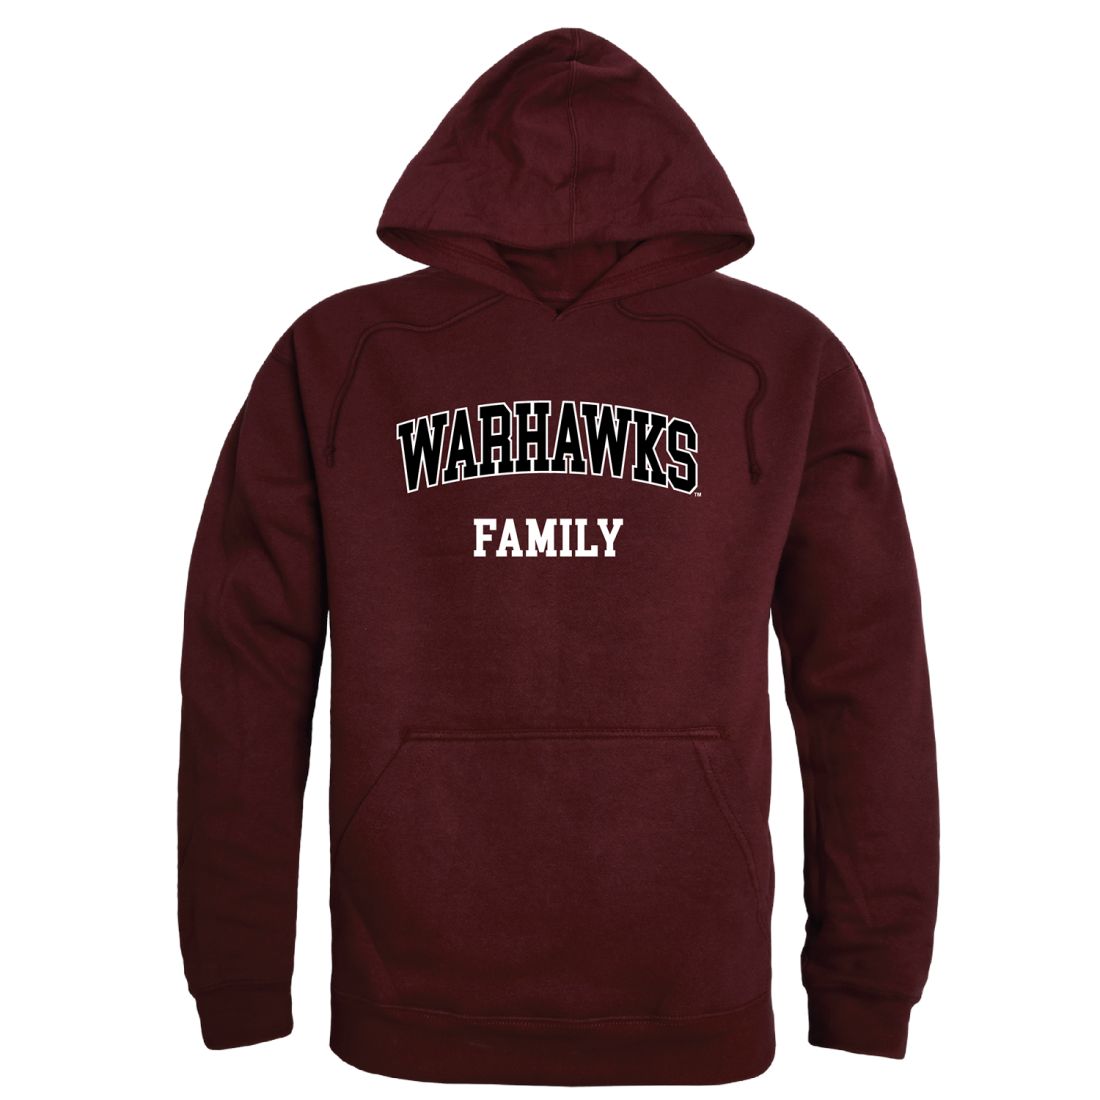 ULM University of Louisiana Monroe Warhawks Family Hoodie Sweatshirts